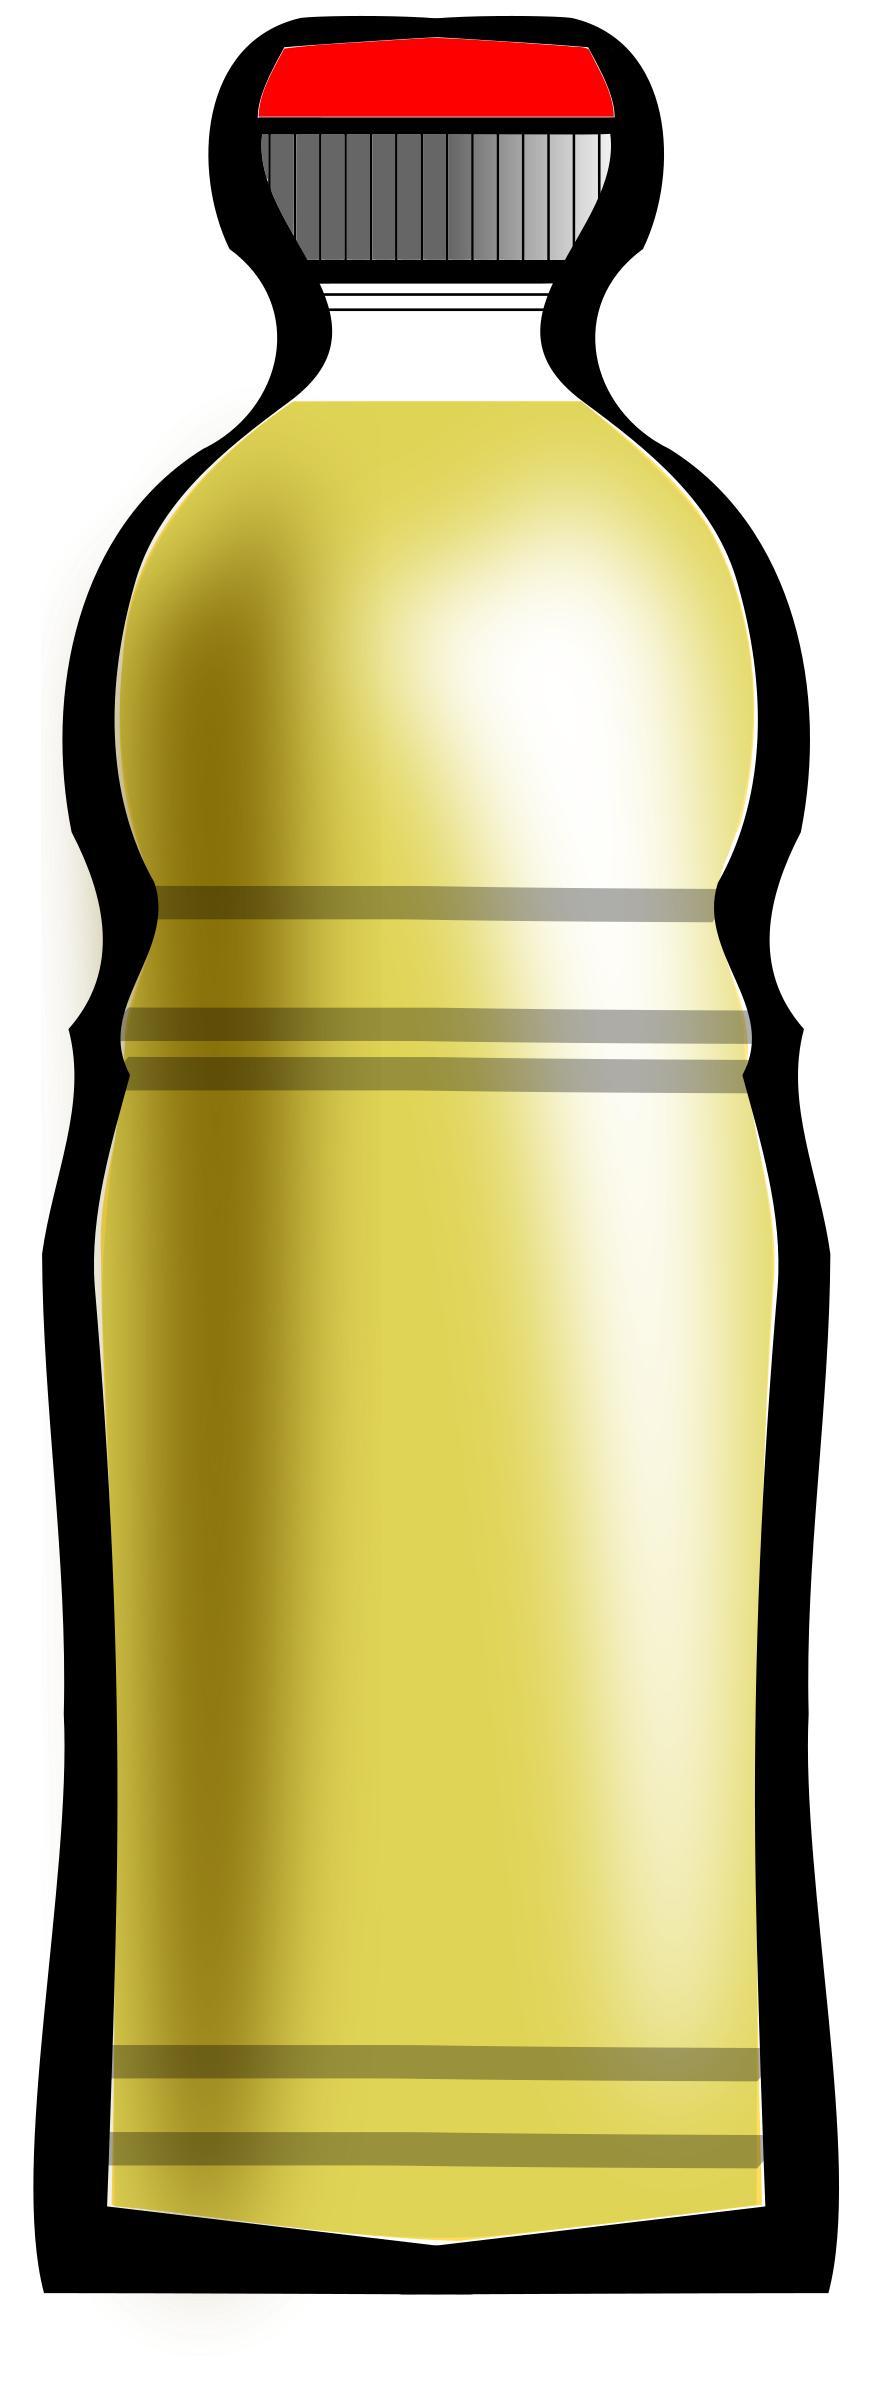 Sun flower Oil Bottle png transparent